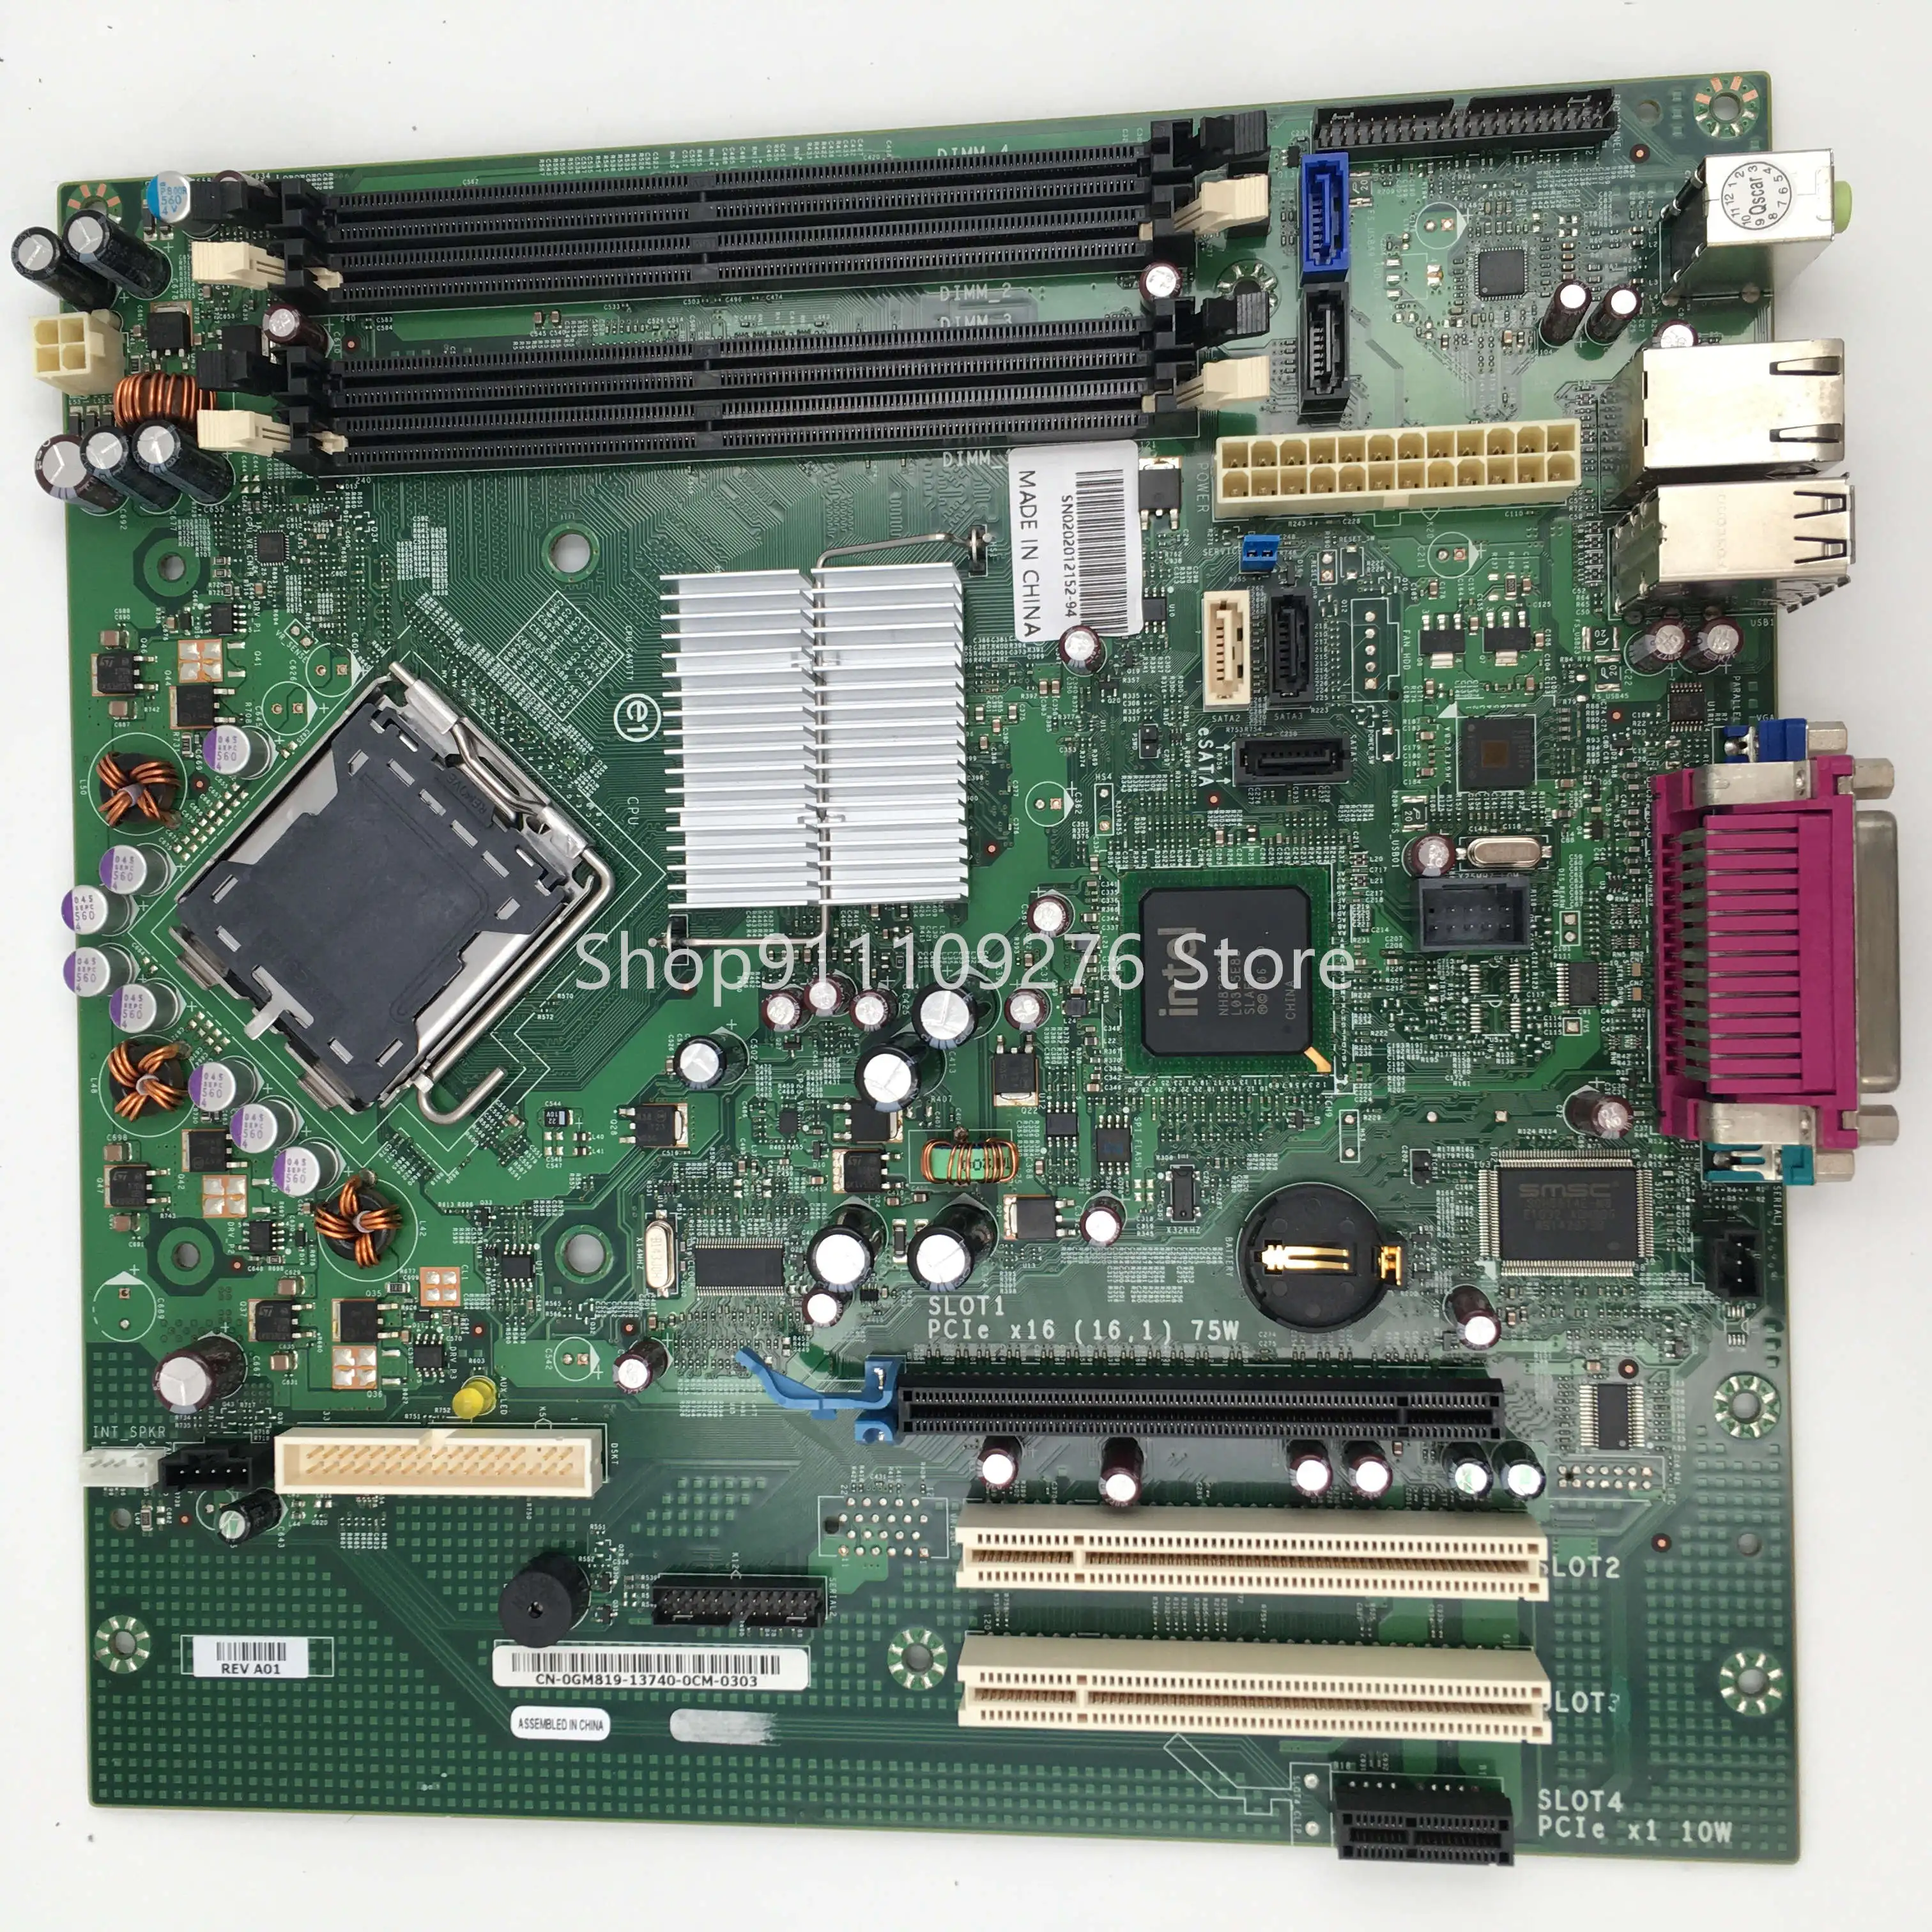 Original-Motherboard-for-DELL-OptiPlex-755-MT-motherboard-Q35-GM819-JY065-Y255C.jpg